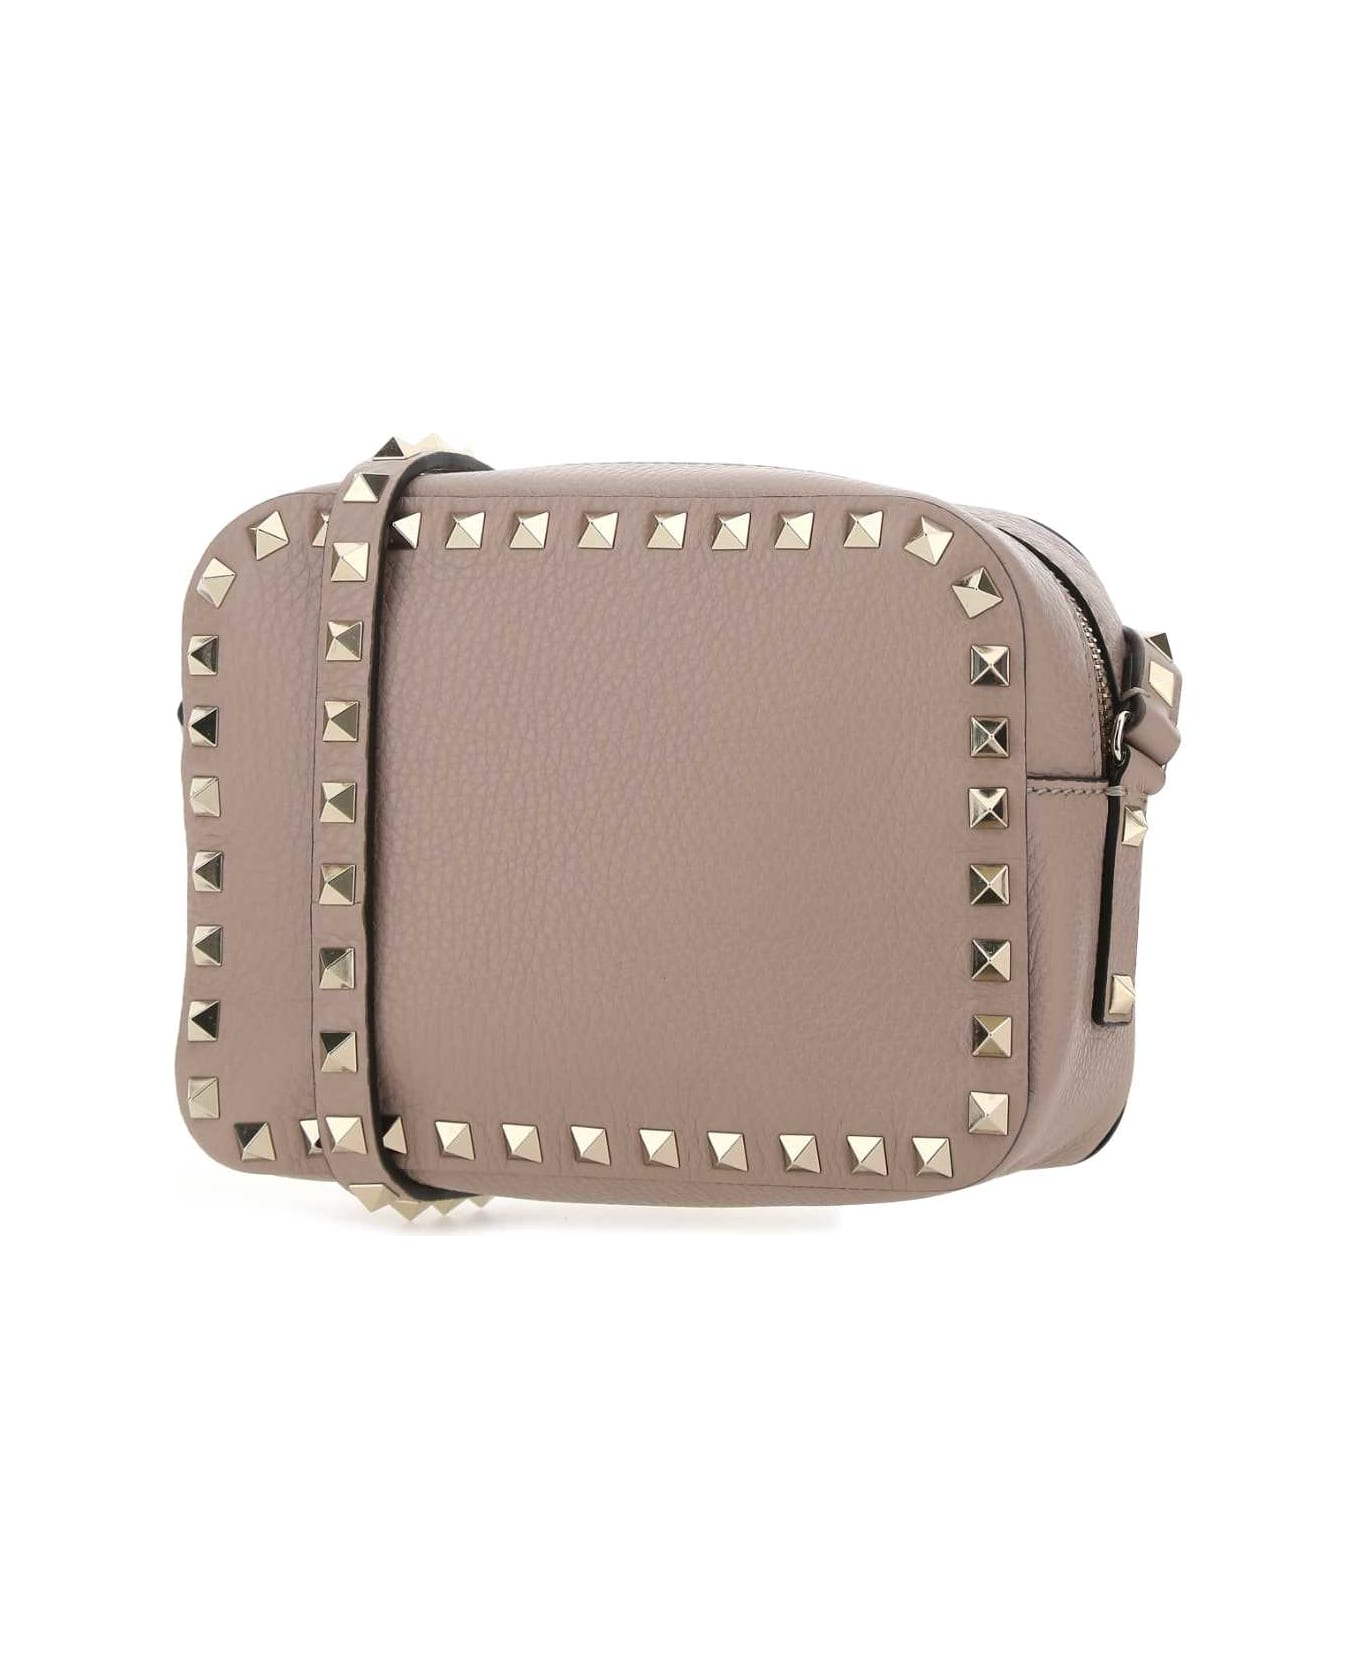 Valentino Garavani Antiqued Pink Leather Rockstud Crossbody Bag - POUDRE